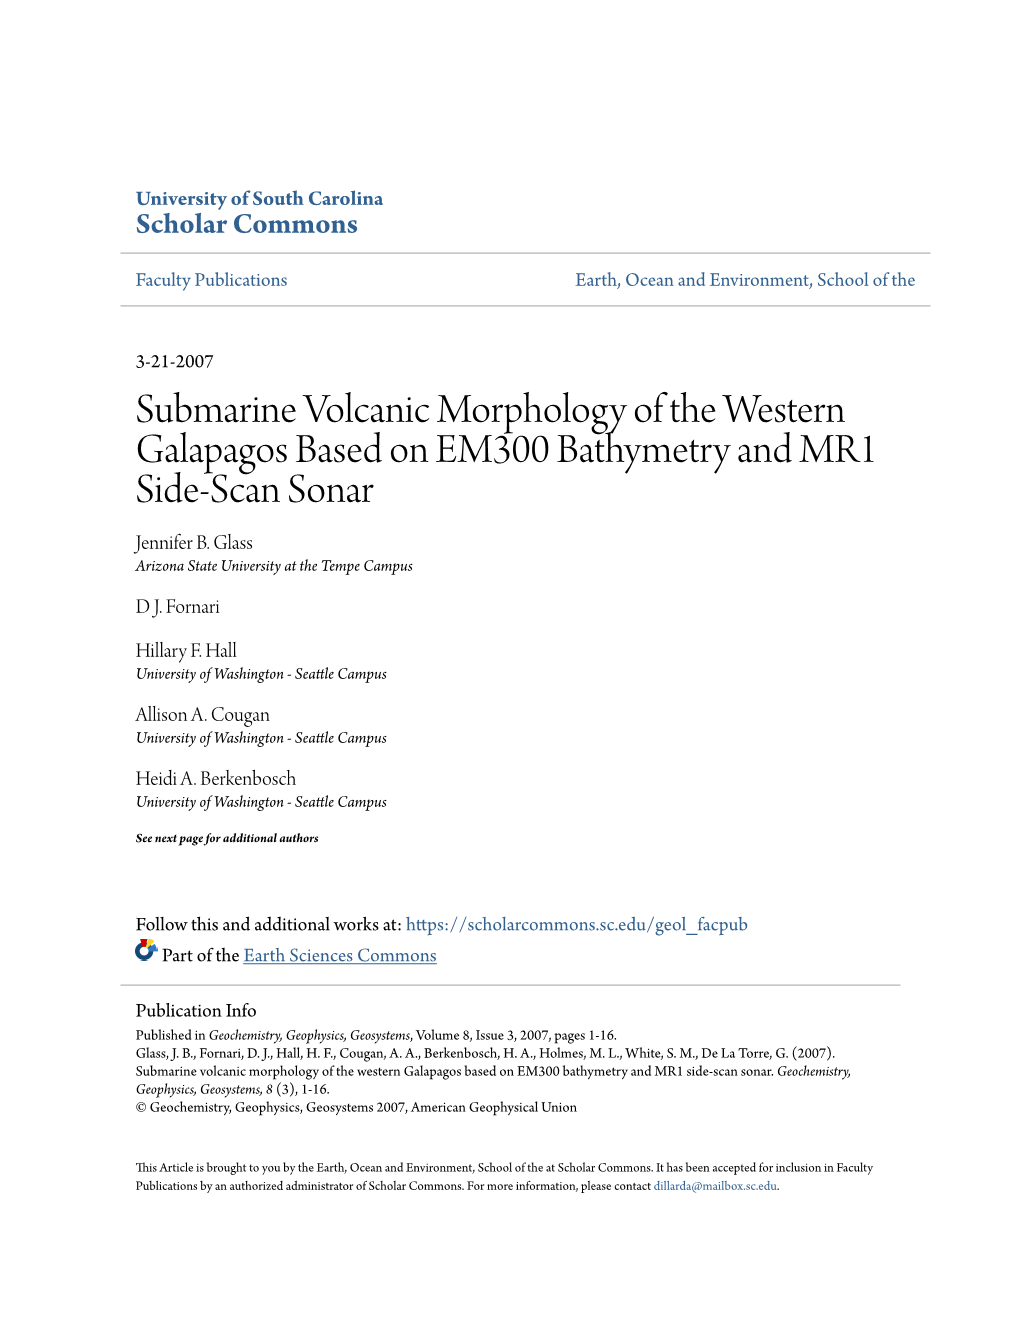 Submarine Volcanic Morphology of the Western Galapagos Based on EM300 Bathymetry and MR1 Side-Scan Sonar Jennifer B